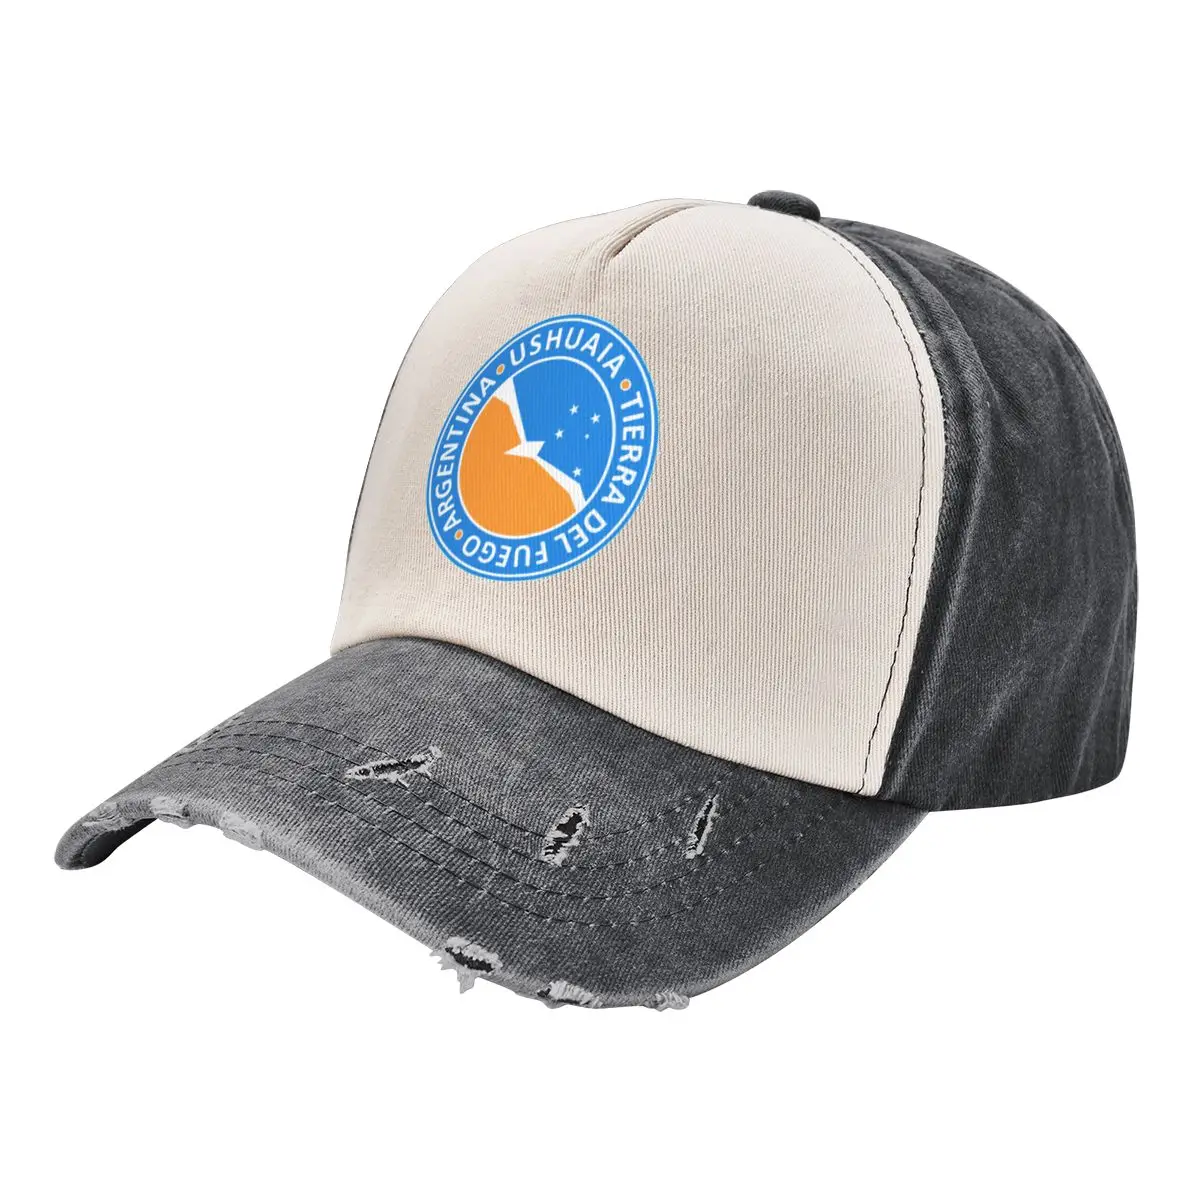 

Ushuaia Tierra del Fuego Argentina Baseball Cap dad hat Hat Luxury Brand hiking hat Custom Cap Girl Men's